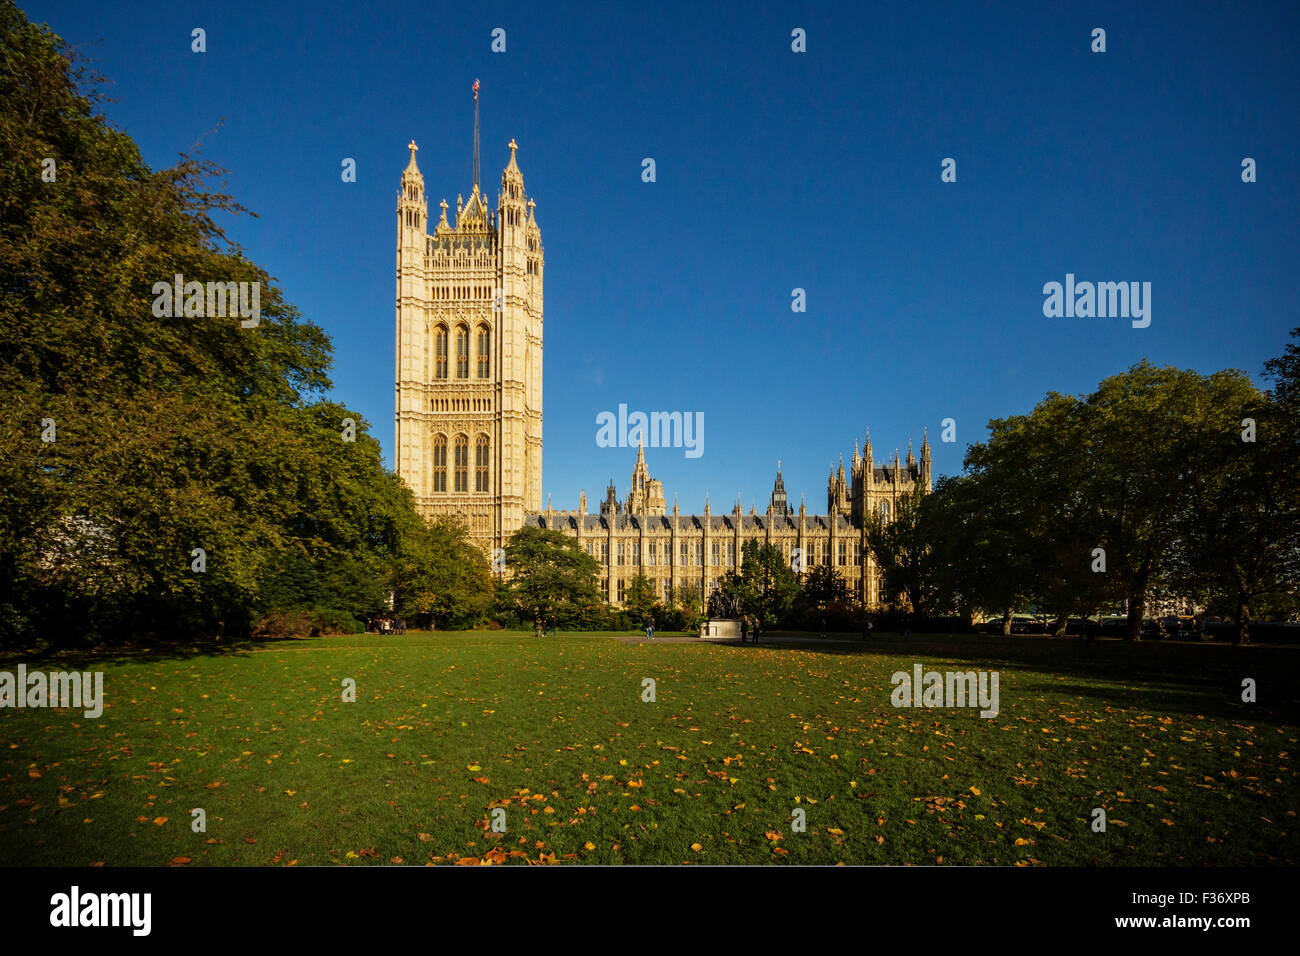 Der Palace of Westminster oder die Houses of Parliament in London vom Victoria Tower Gardens, UK gesehen. Stockfoto